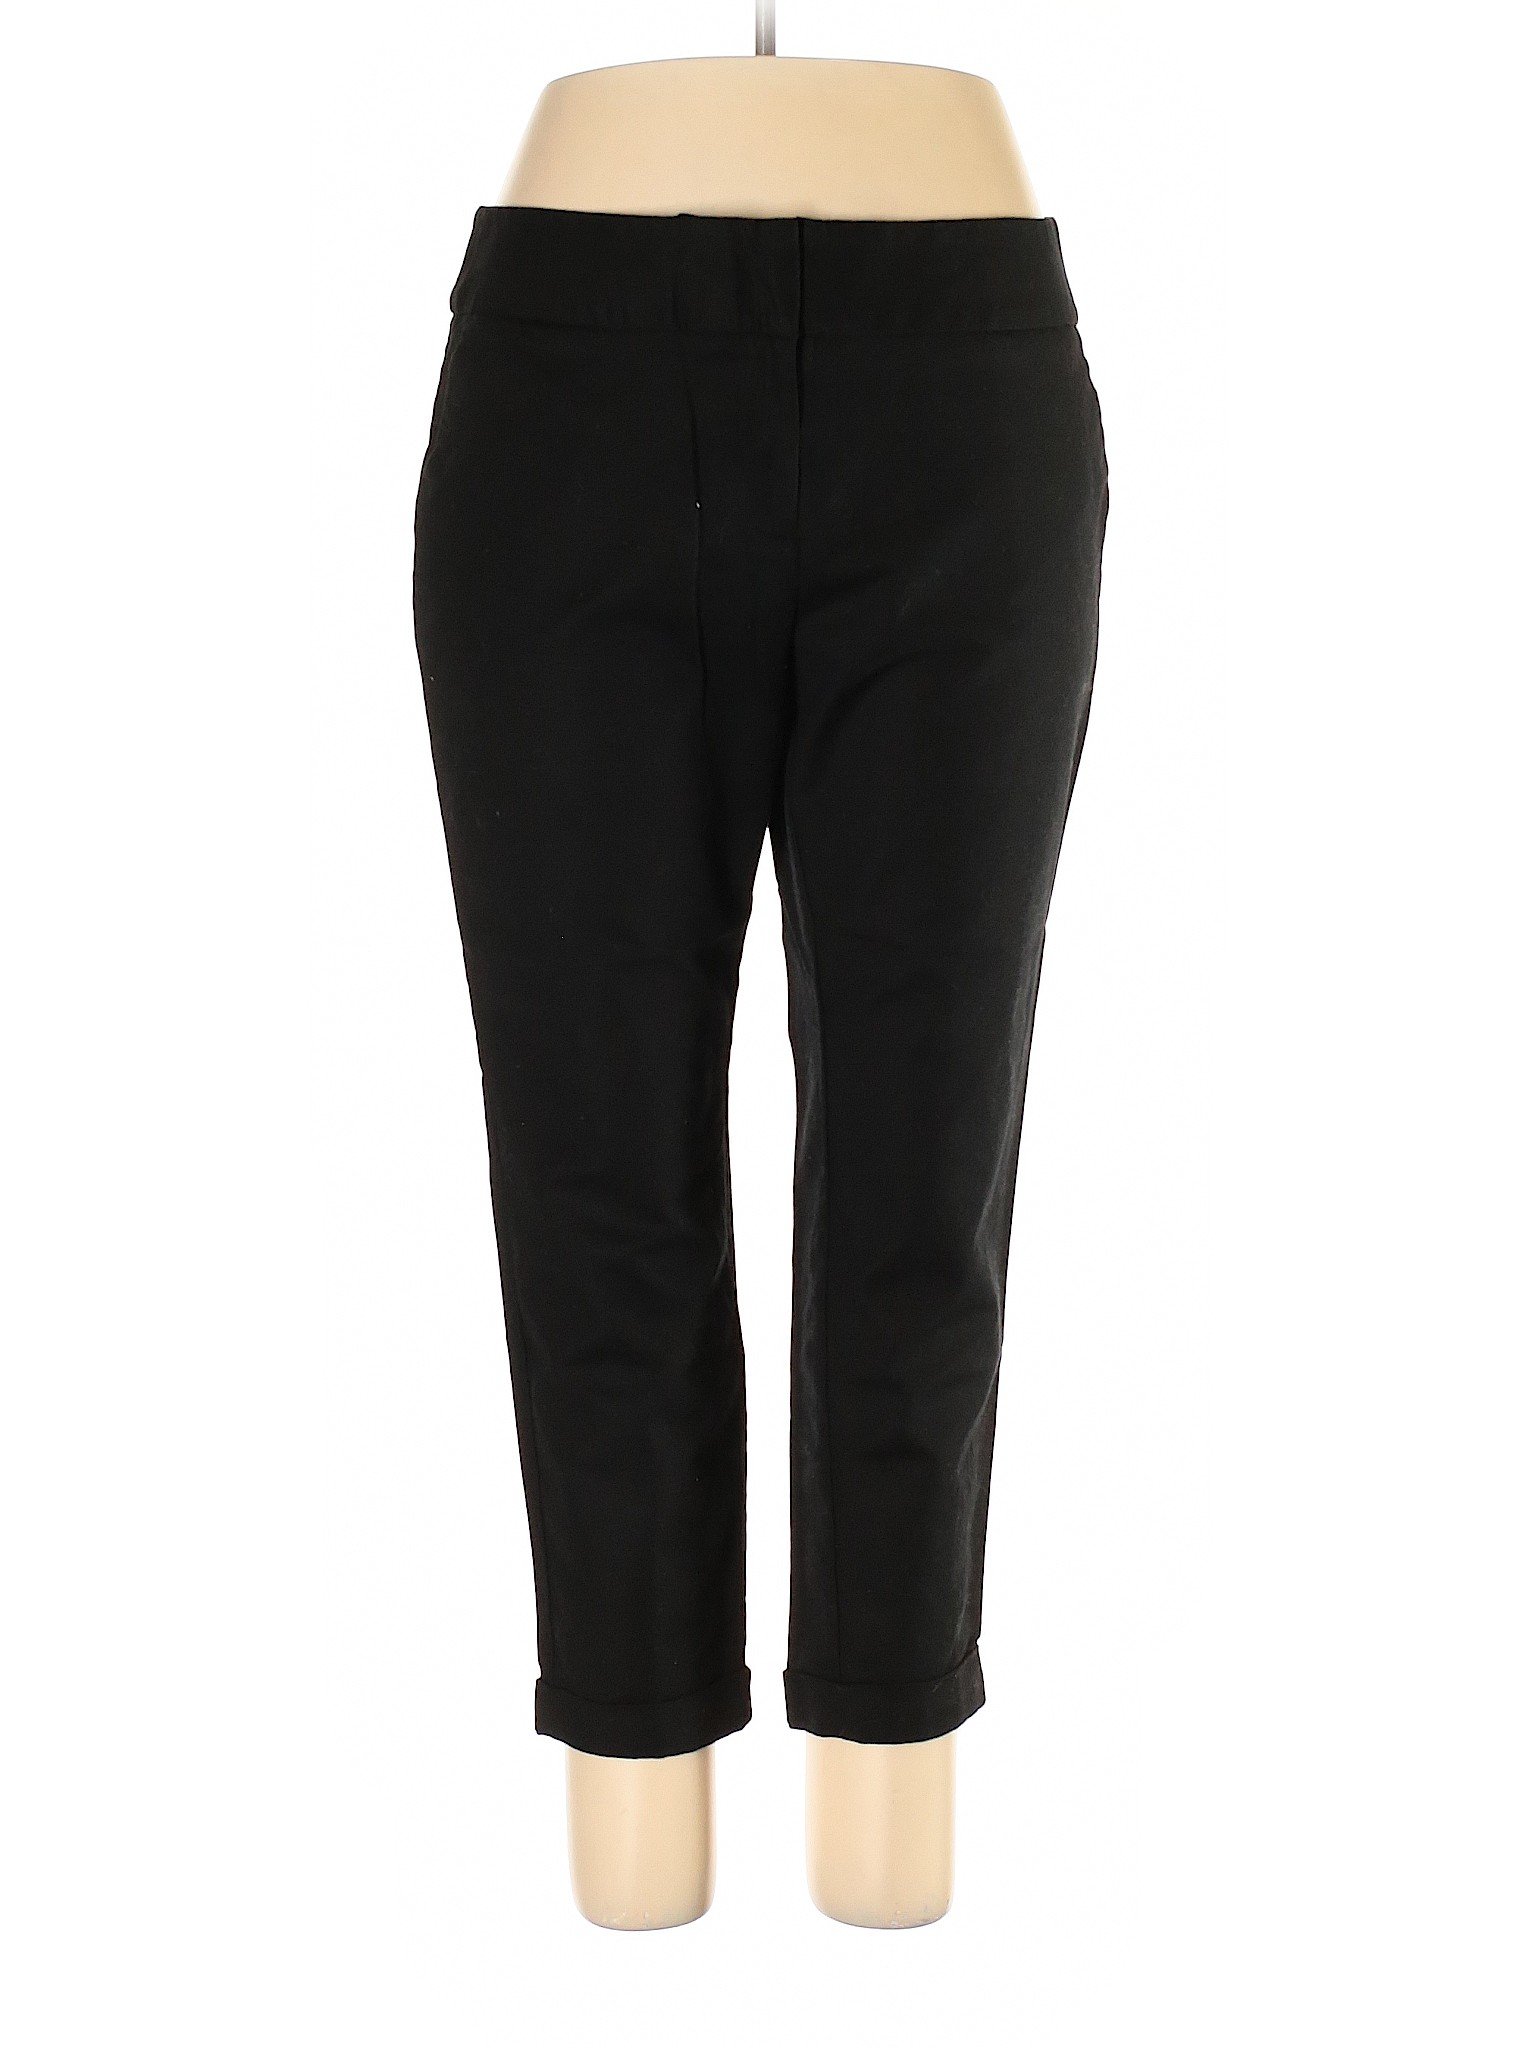 Worthington Women Black Dress Pants 16 Petites | eBay